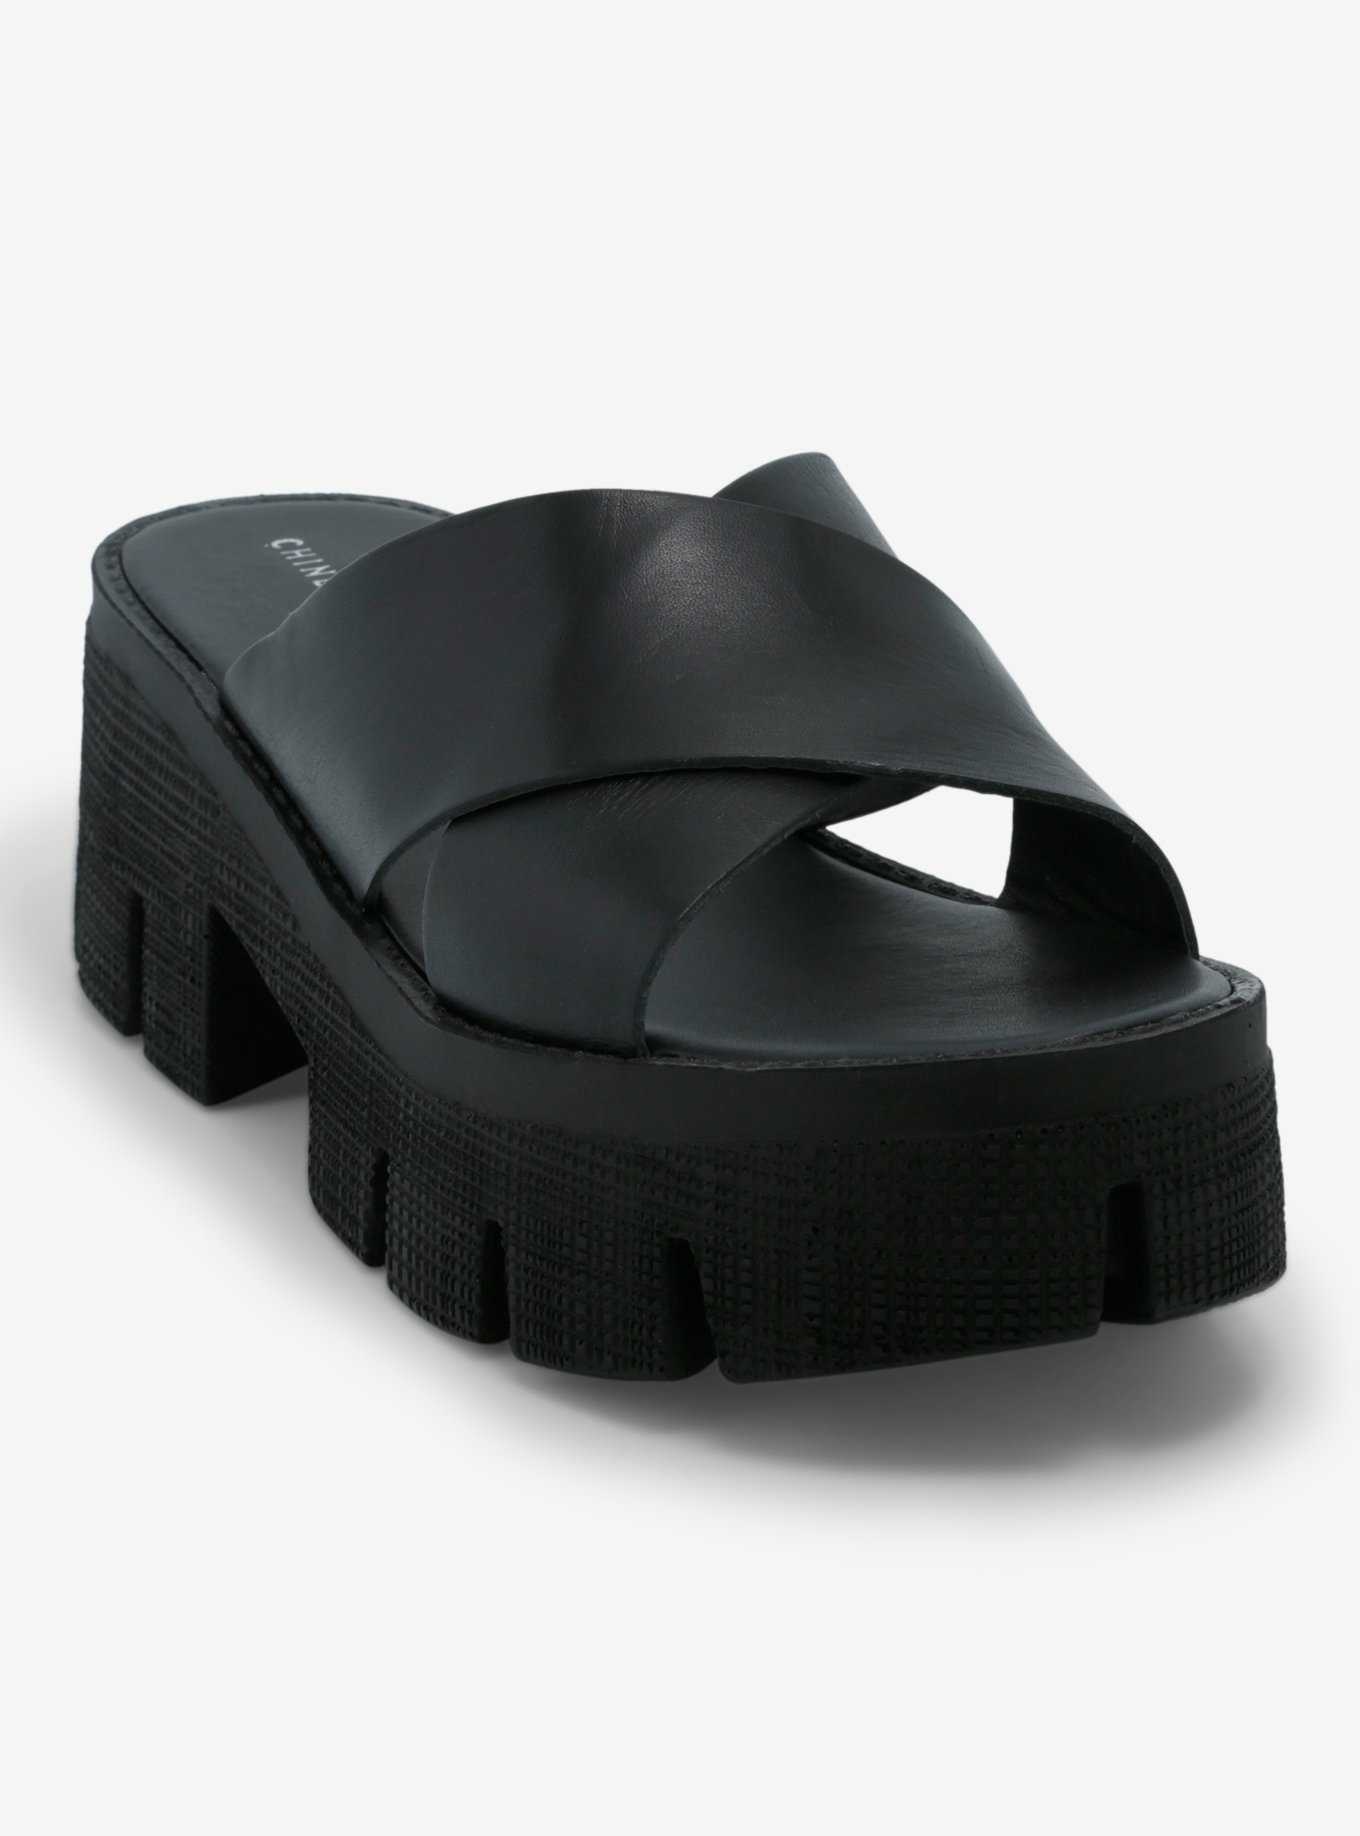 Chinese Laundry Black Crisscross Platform Sandals, , hi-res